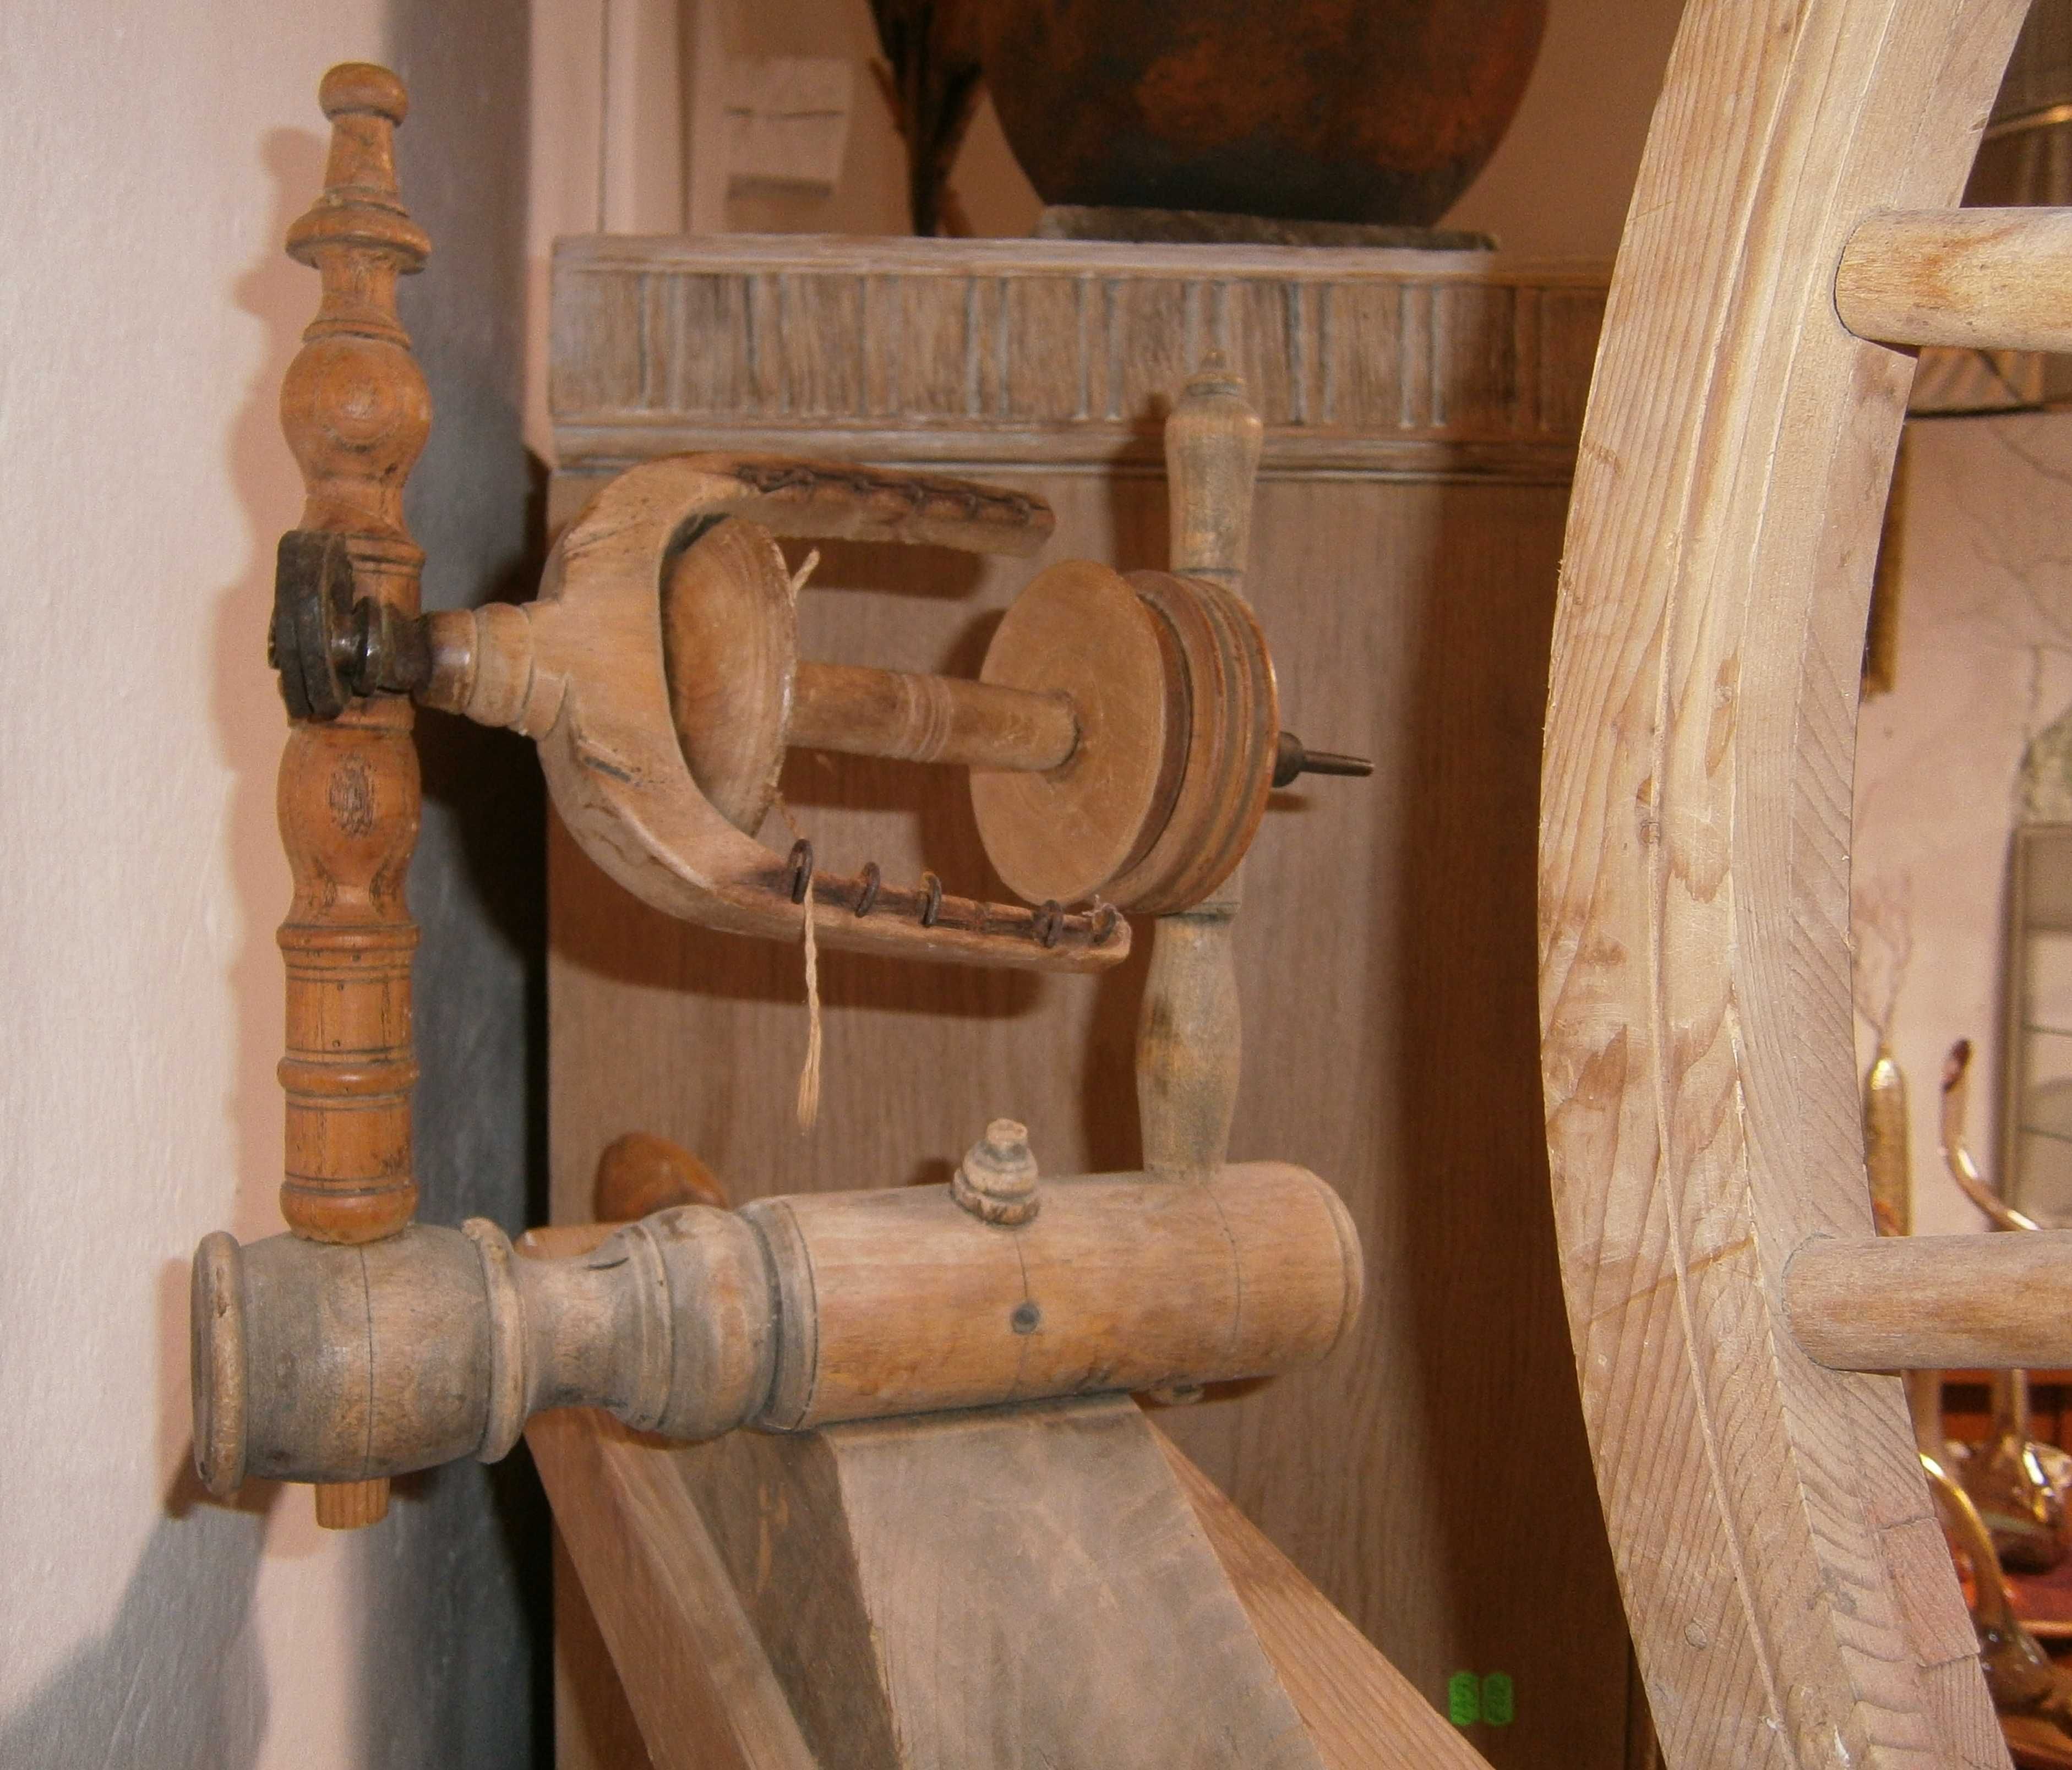 Fuior de tors lana vechi din lemn (Obiect decor rustic/Recuzita)